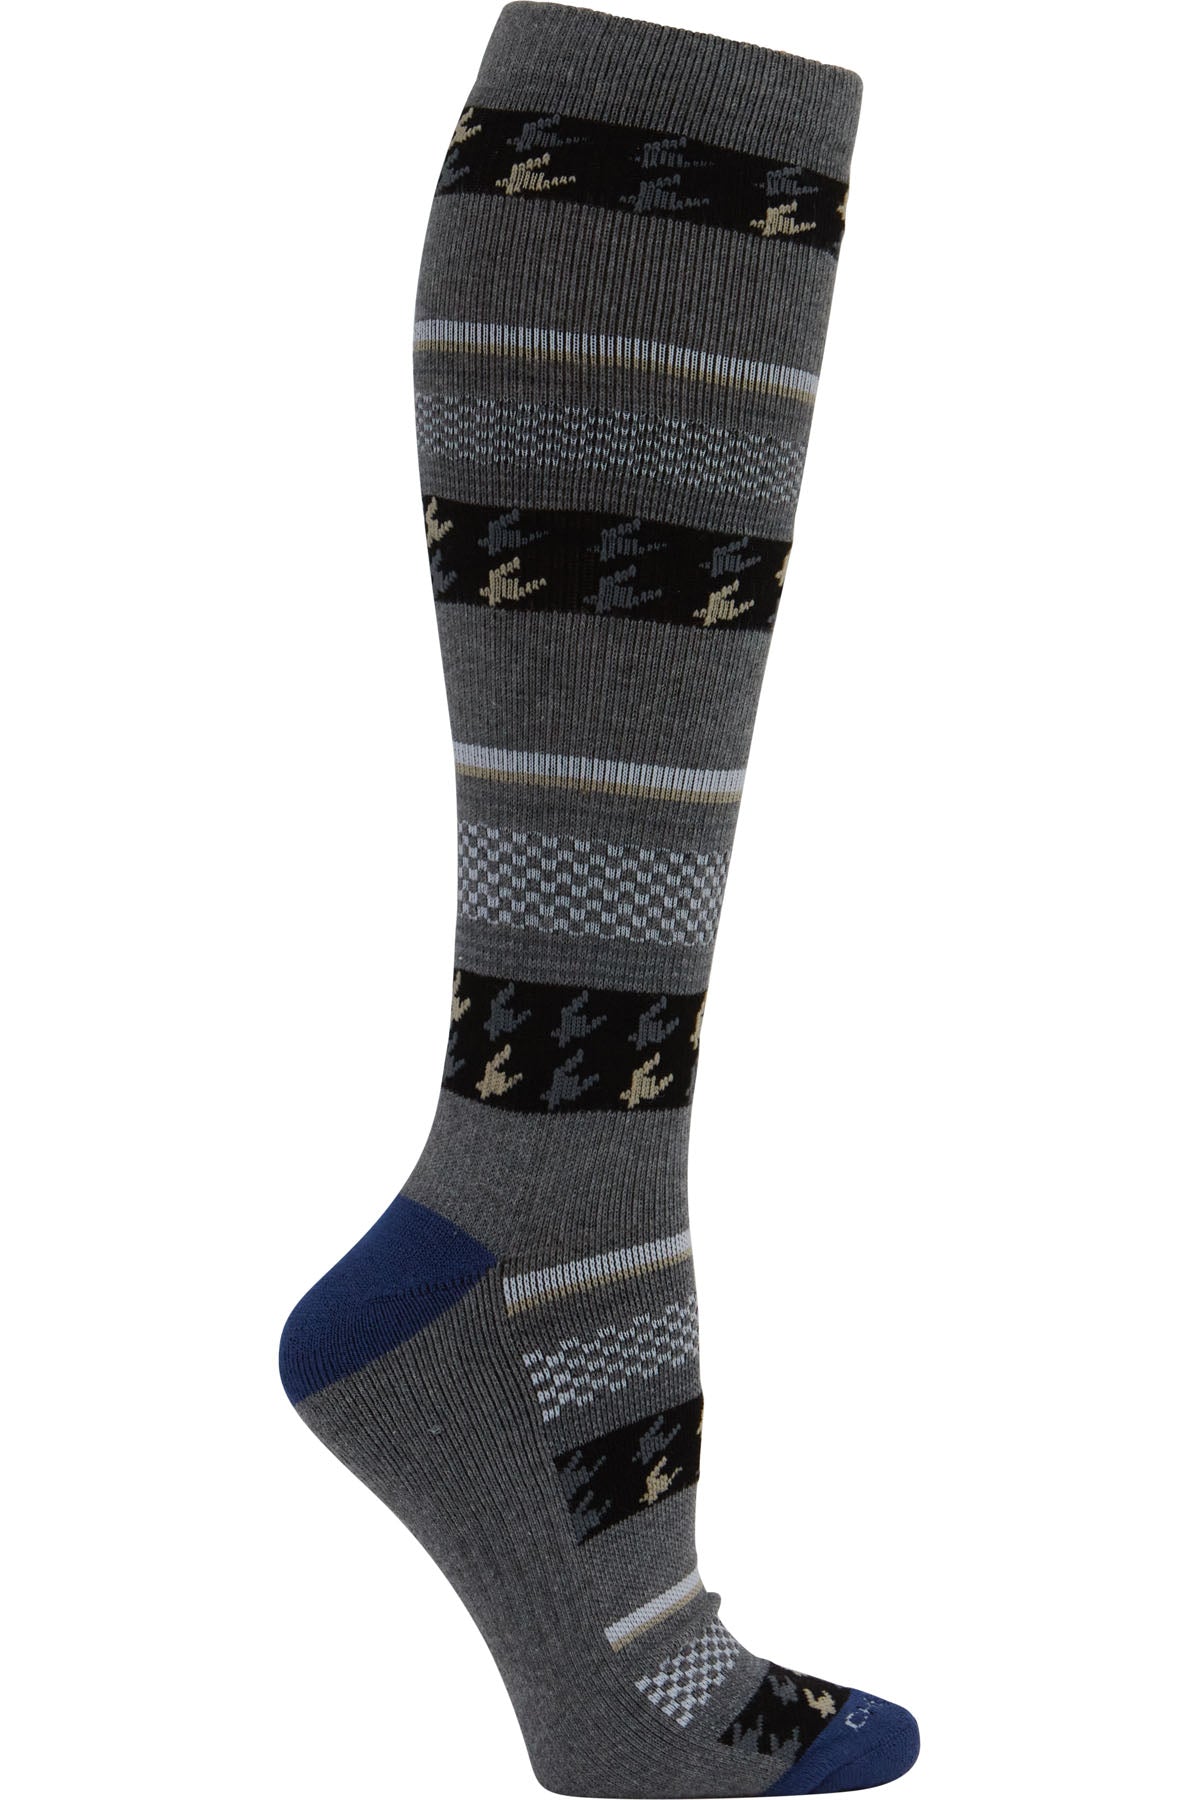 Men's Knee High Compression Socks  15-20 mmHg Men's Compression Socks Cherokee Legwear Composed S/M 